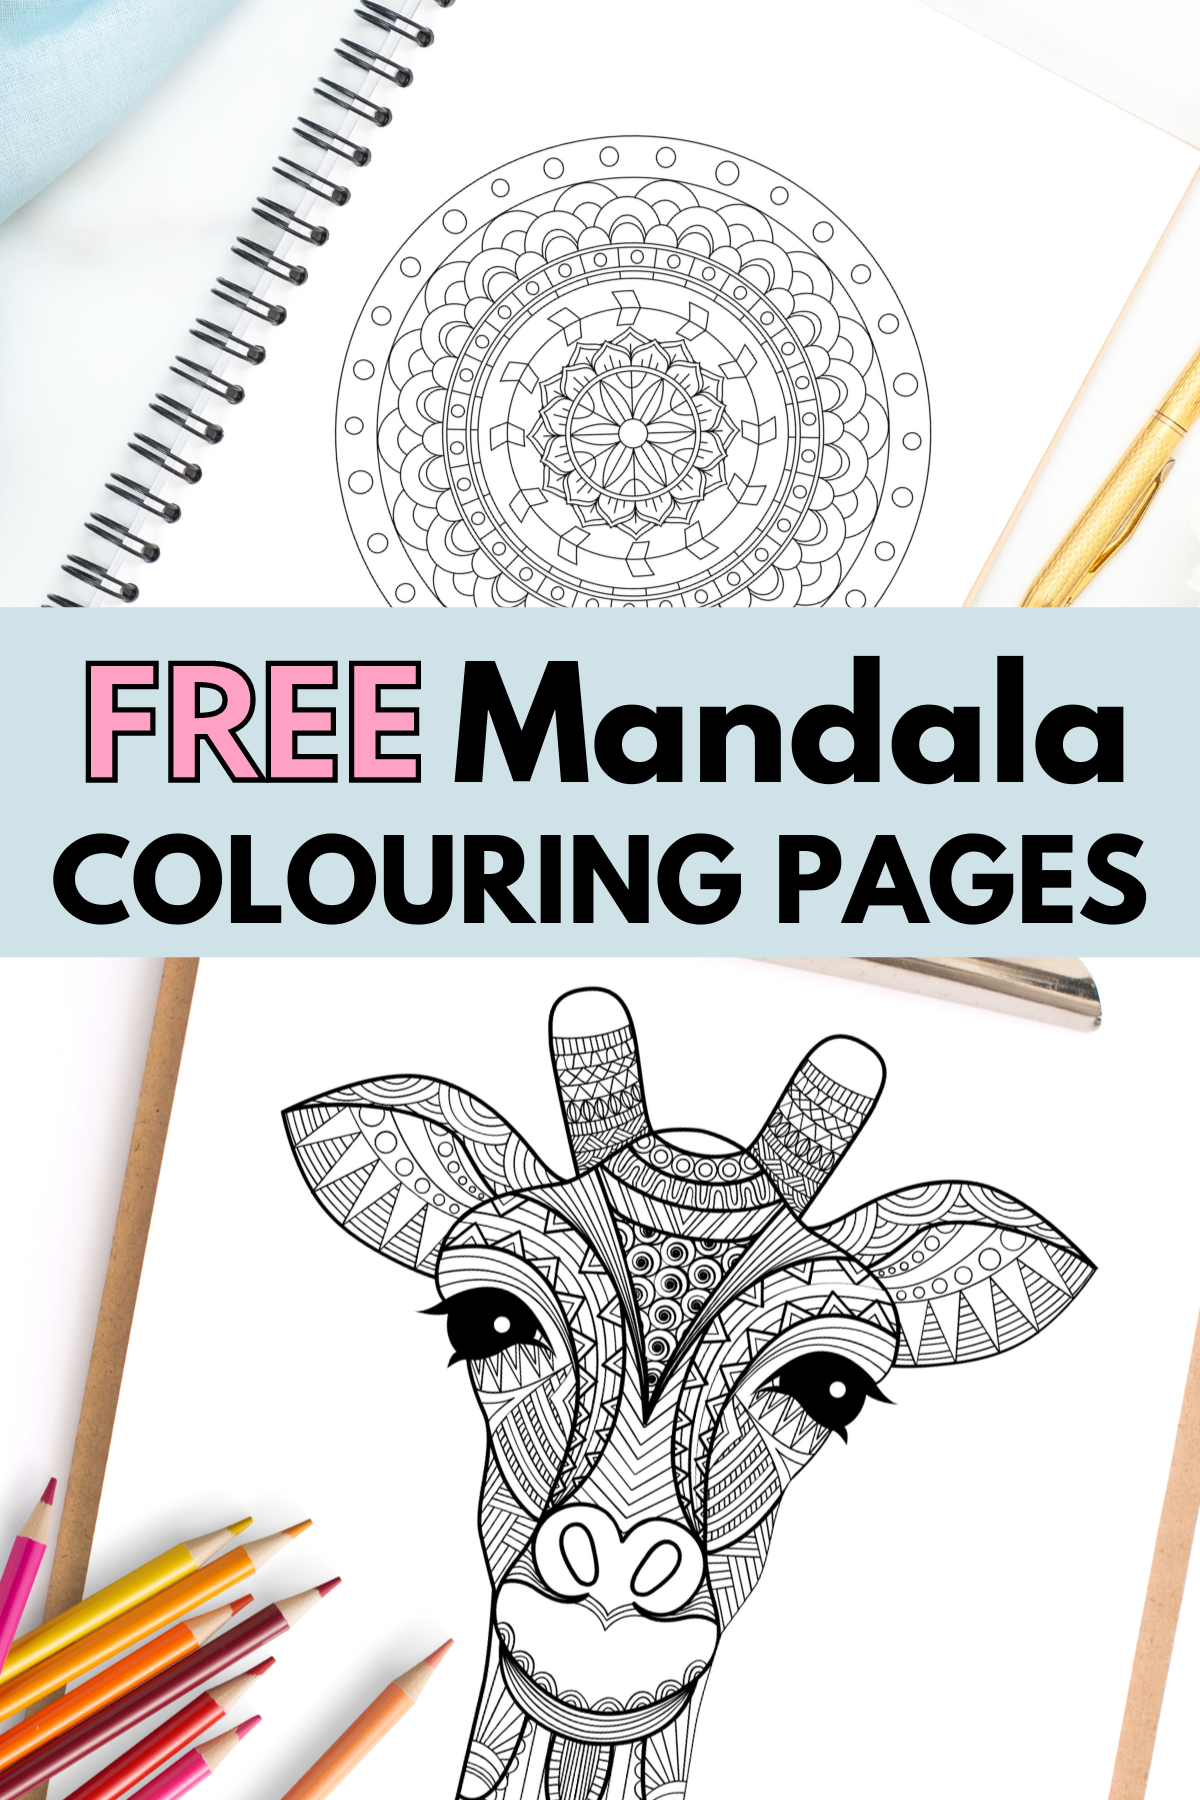 Mandala colouring pages â gathering beauty